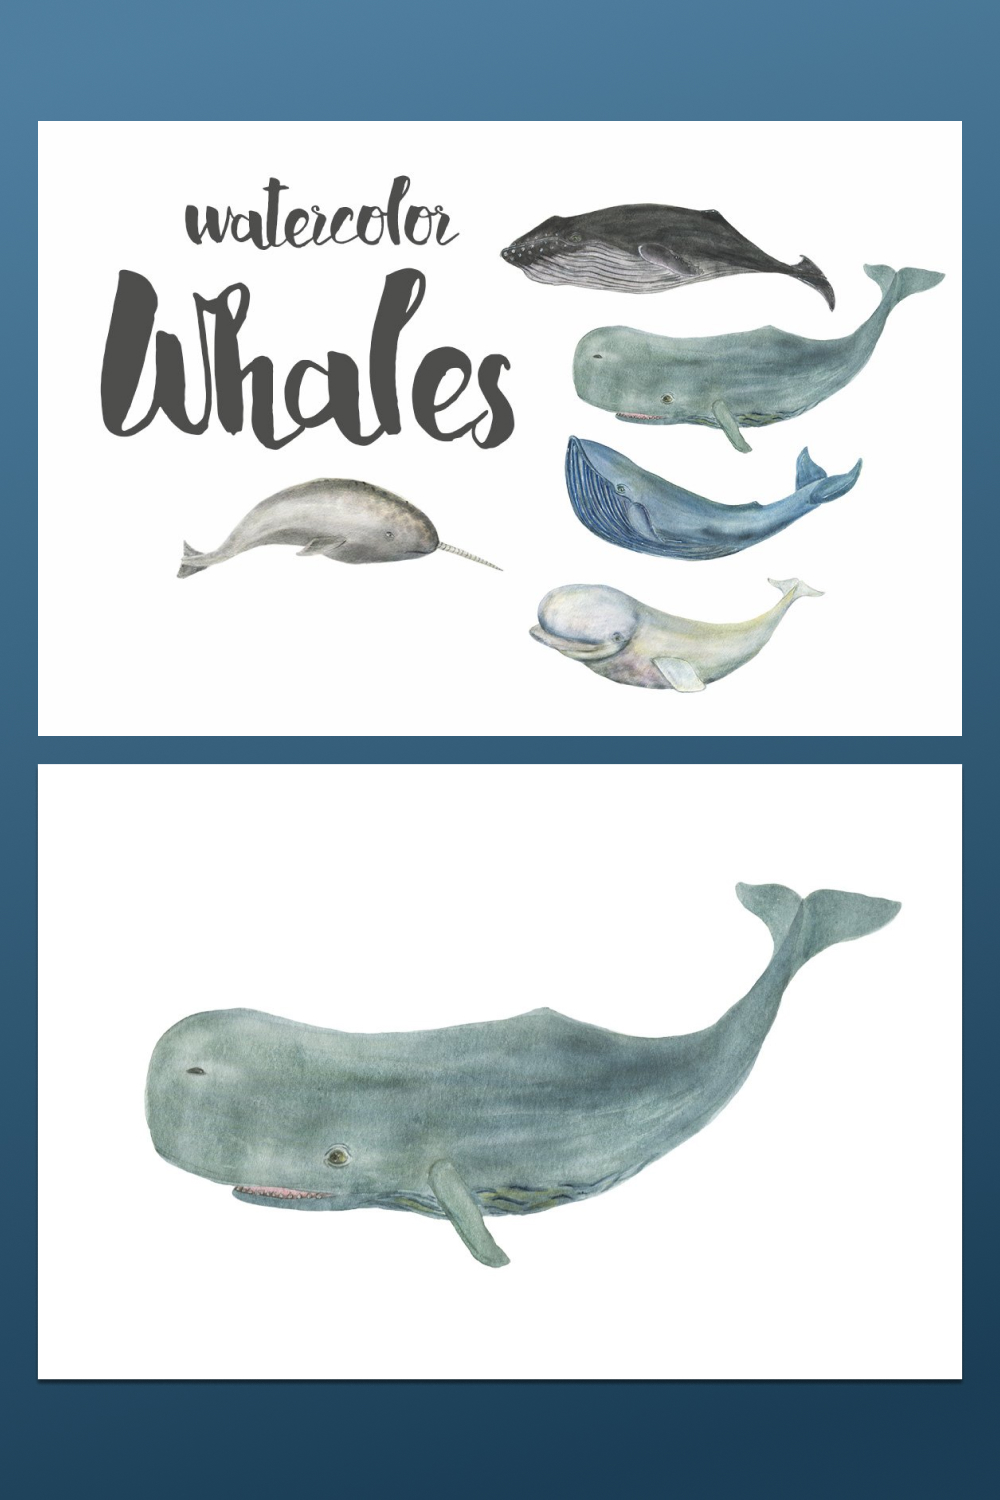 watercolor whales design.